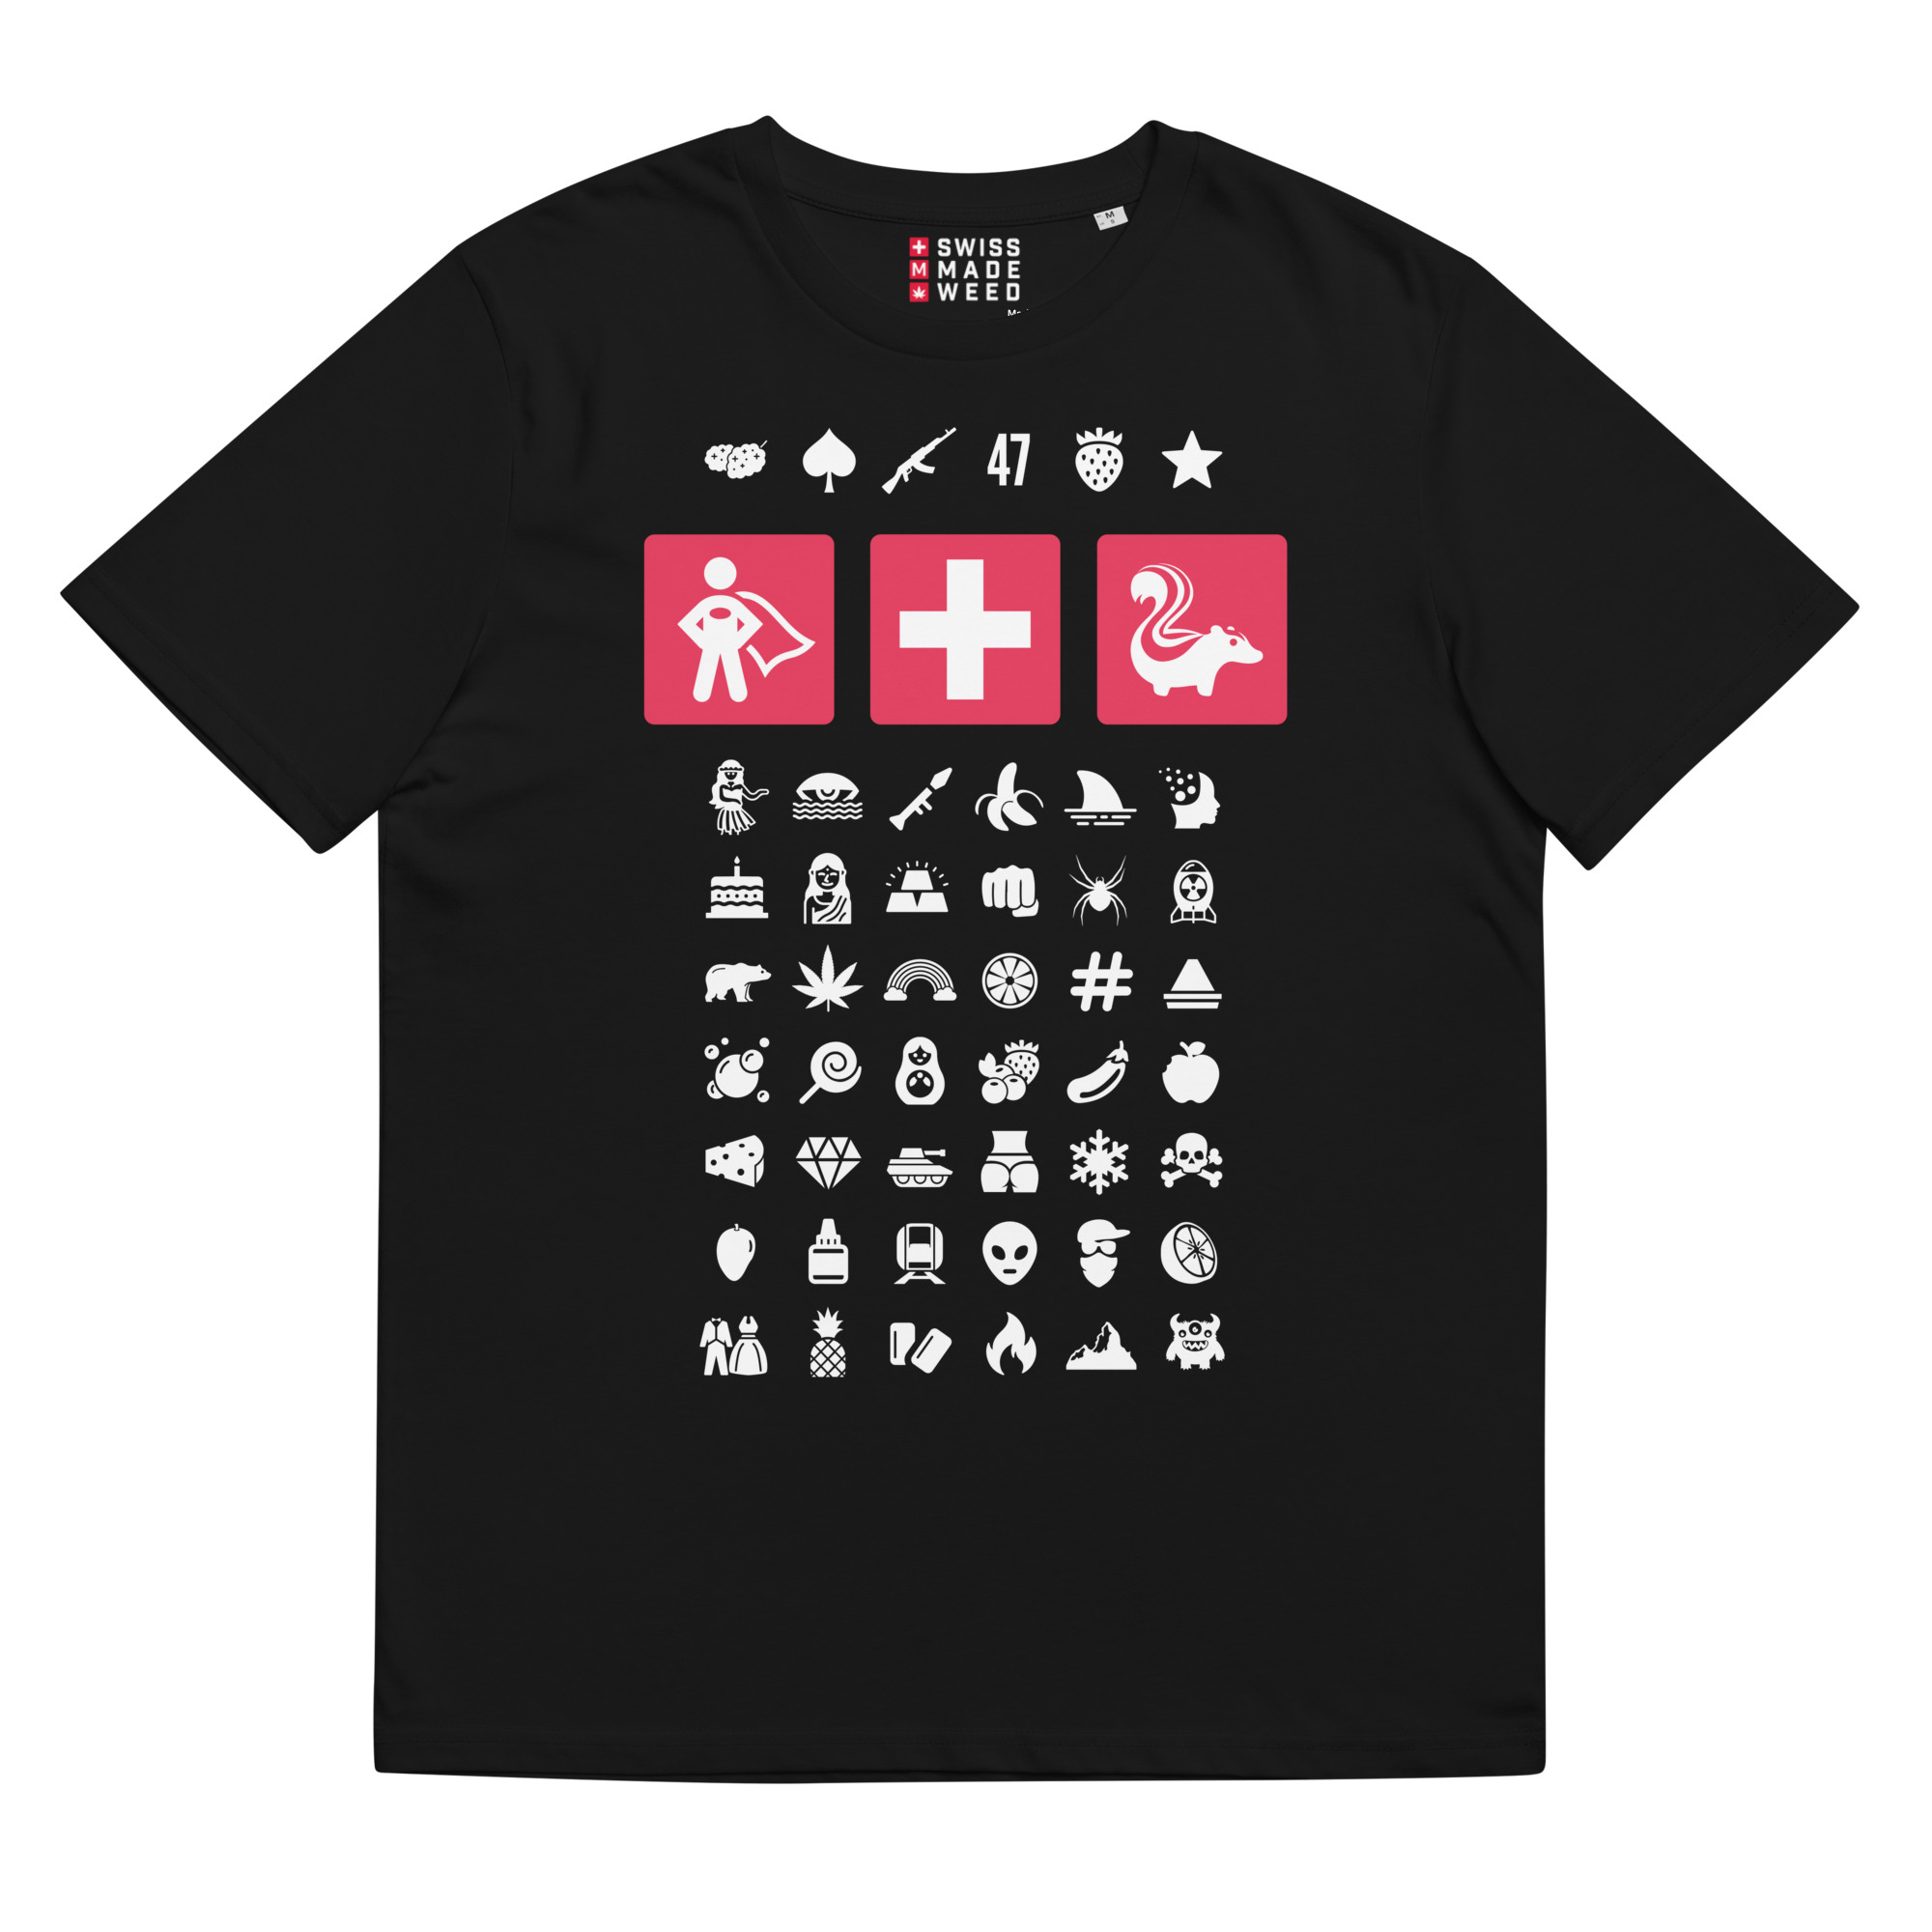 T-shirt – SMW – Super Skunk T-Shirts Wearyt